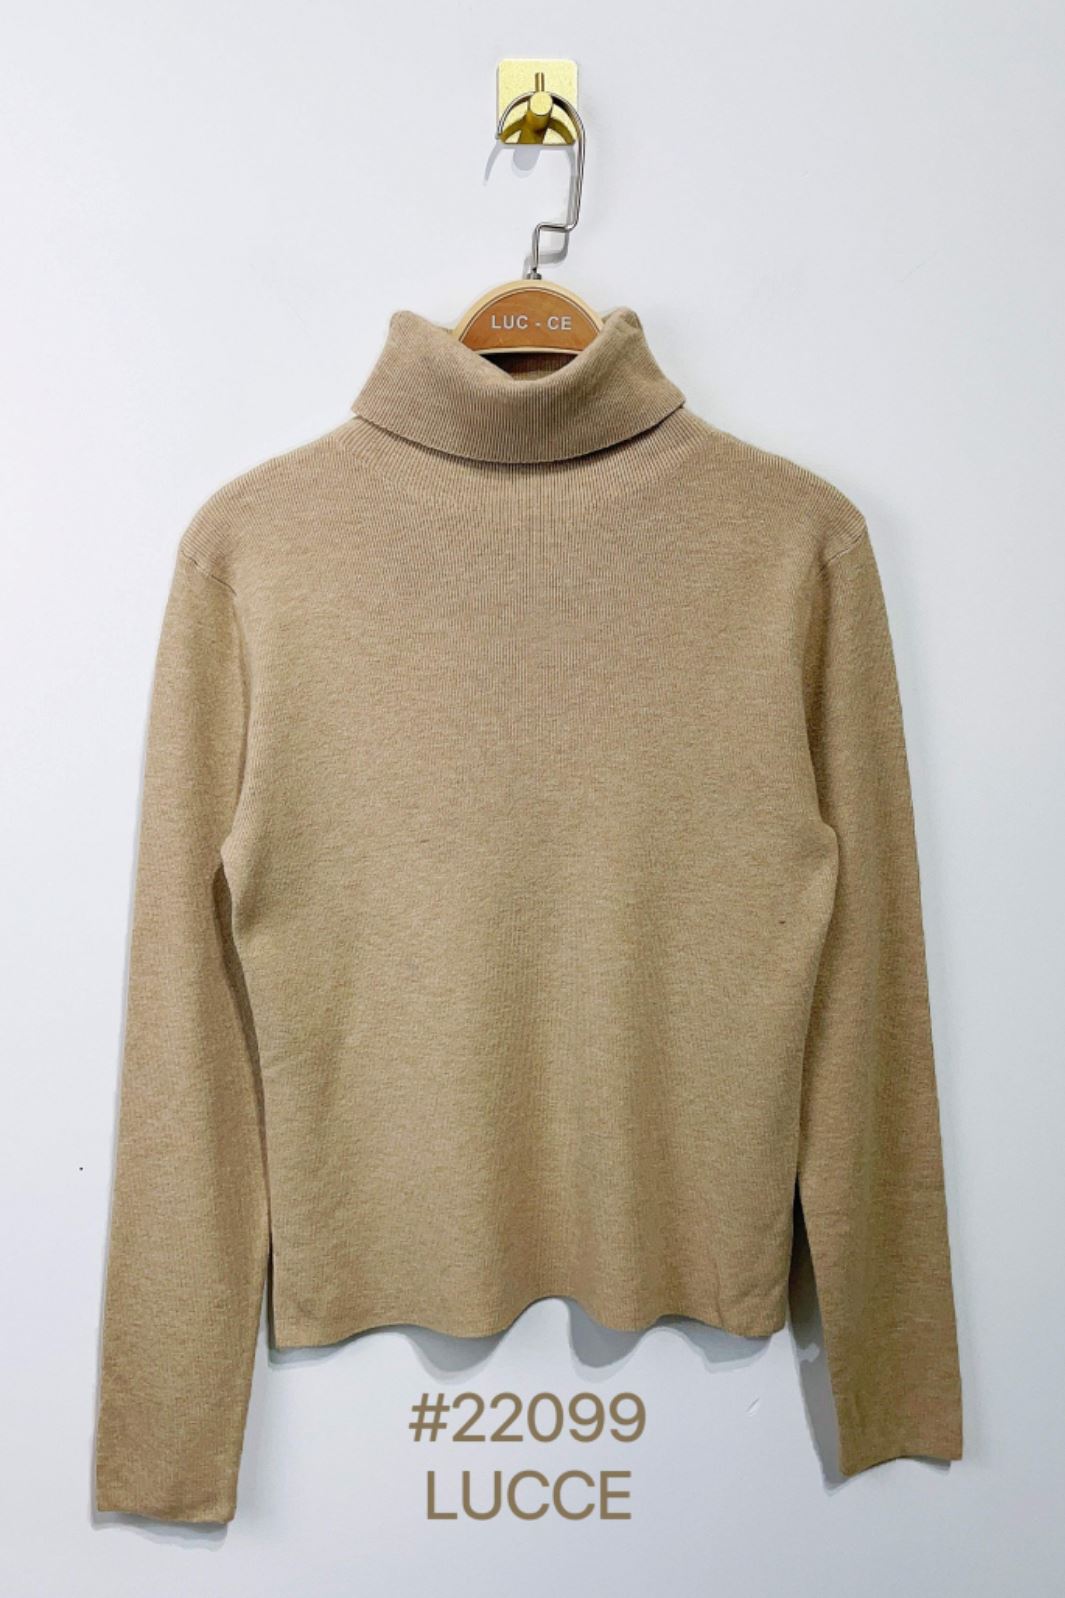 A-bee - Turtleneck Sweater 22099 - Cream Strikbluser 